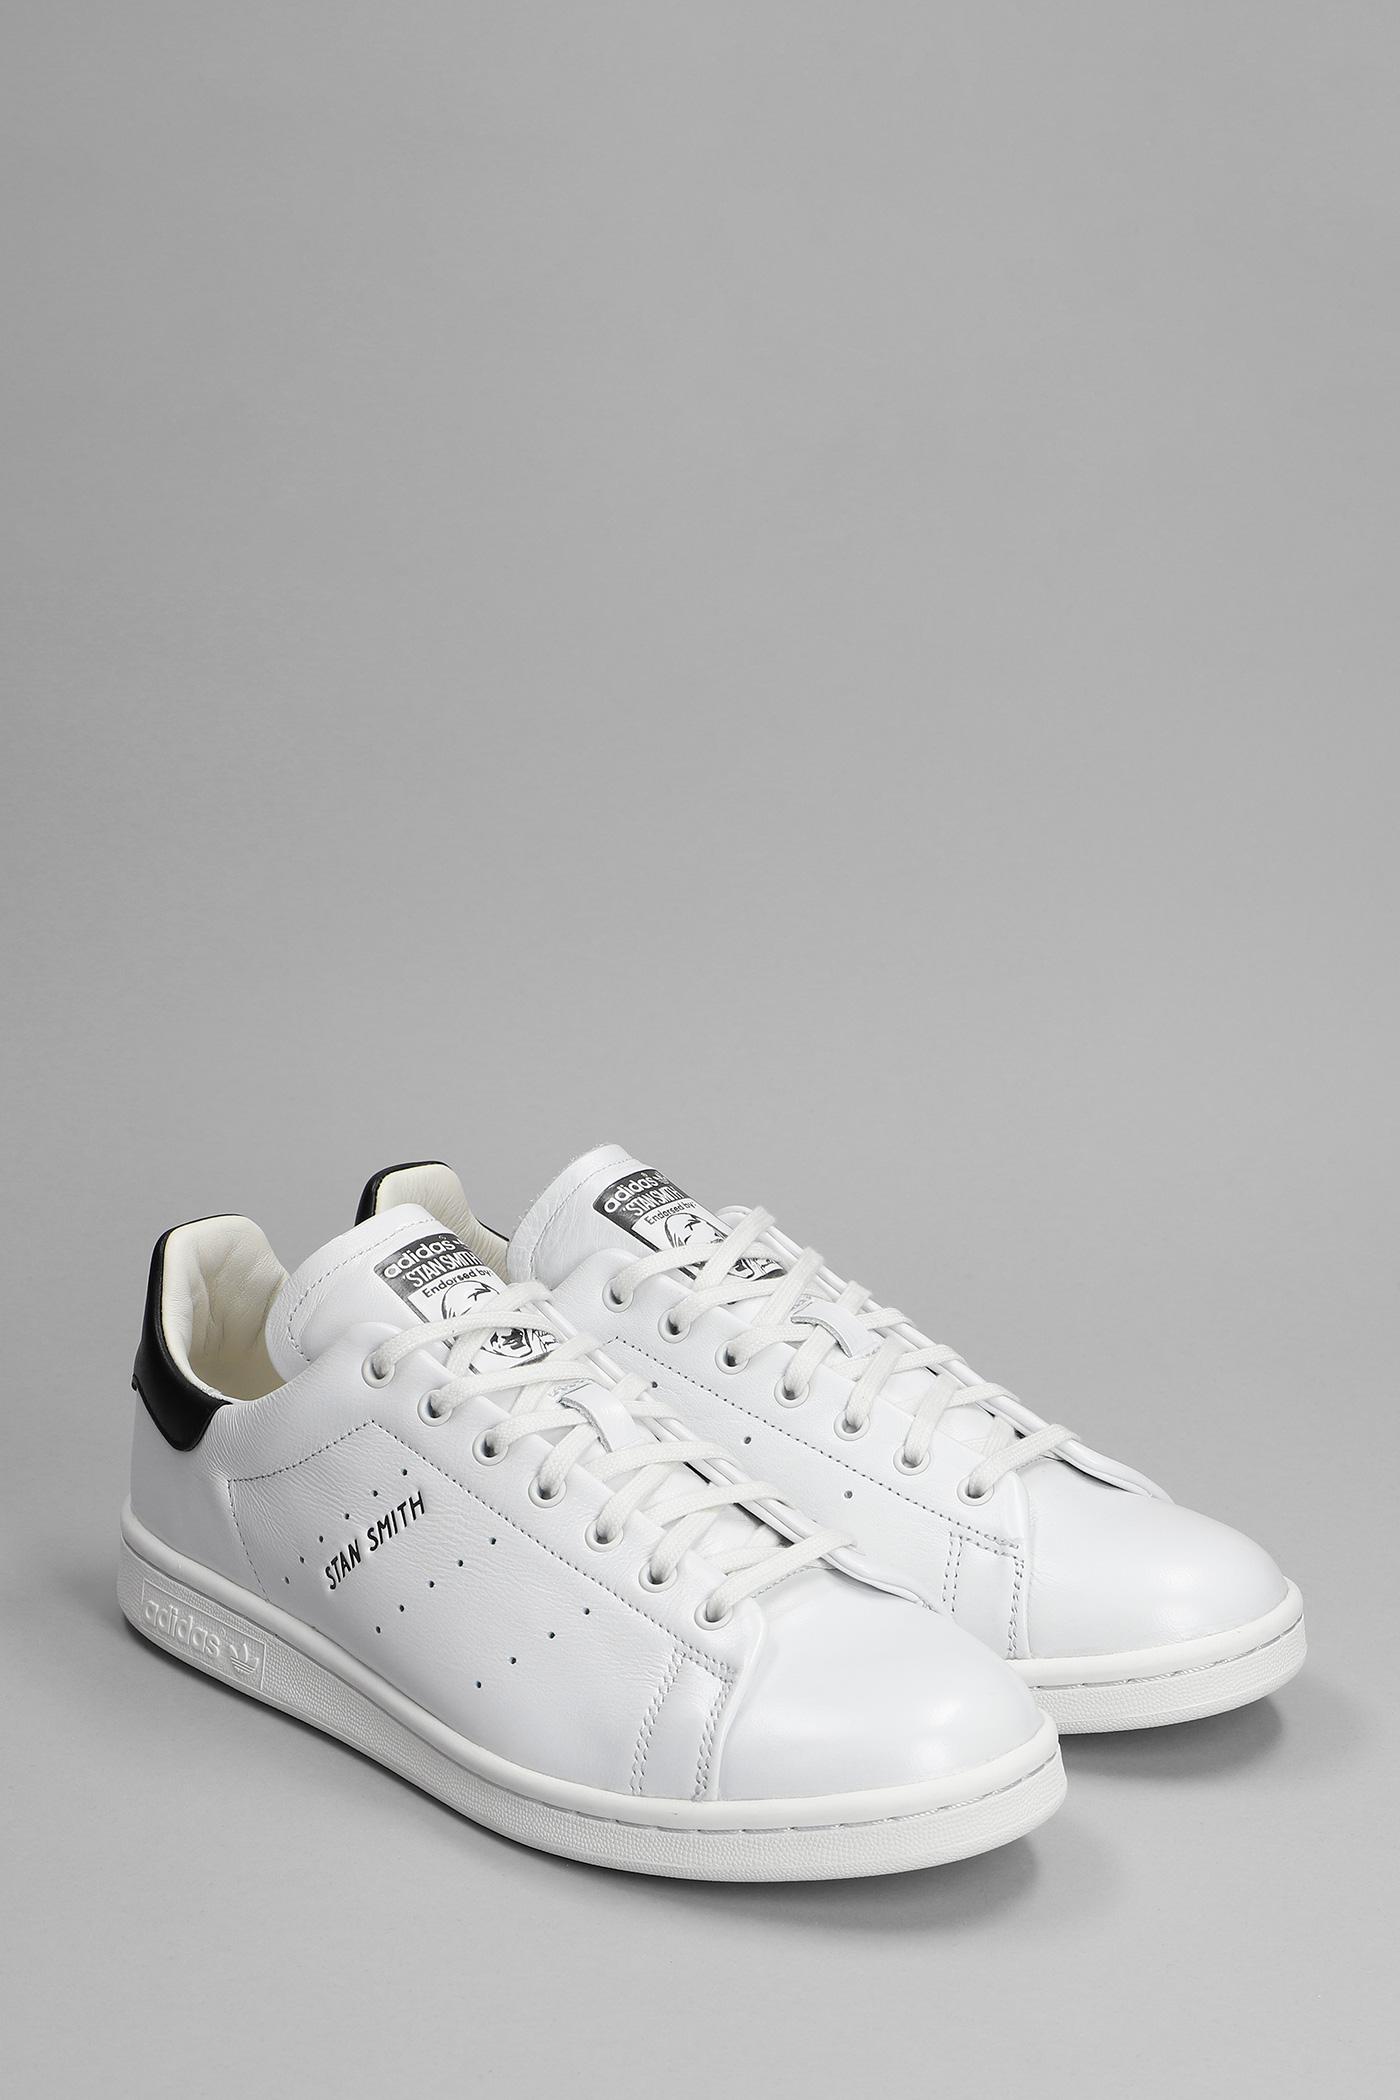 Tegenwerken Oefening jaloezie adidas Stan Smith Lux Sneakers In White Leather for Men | Lyst